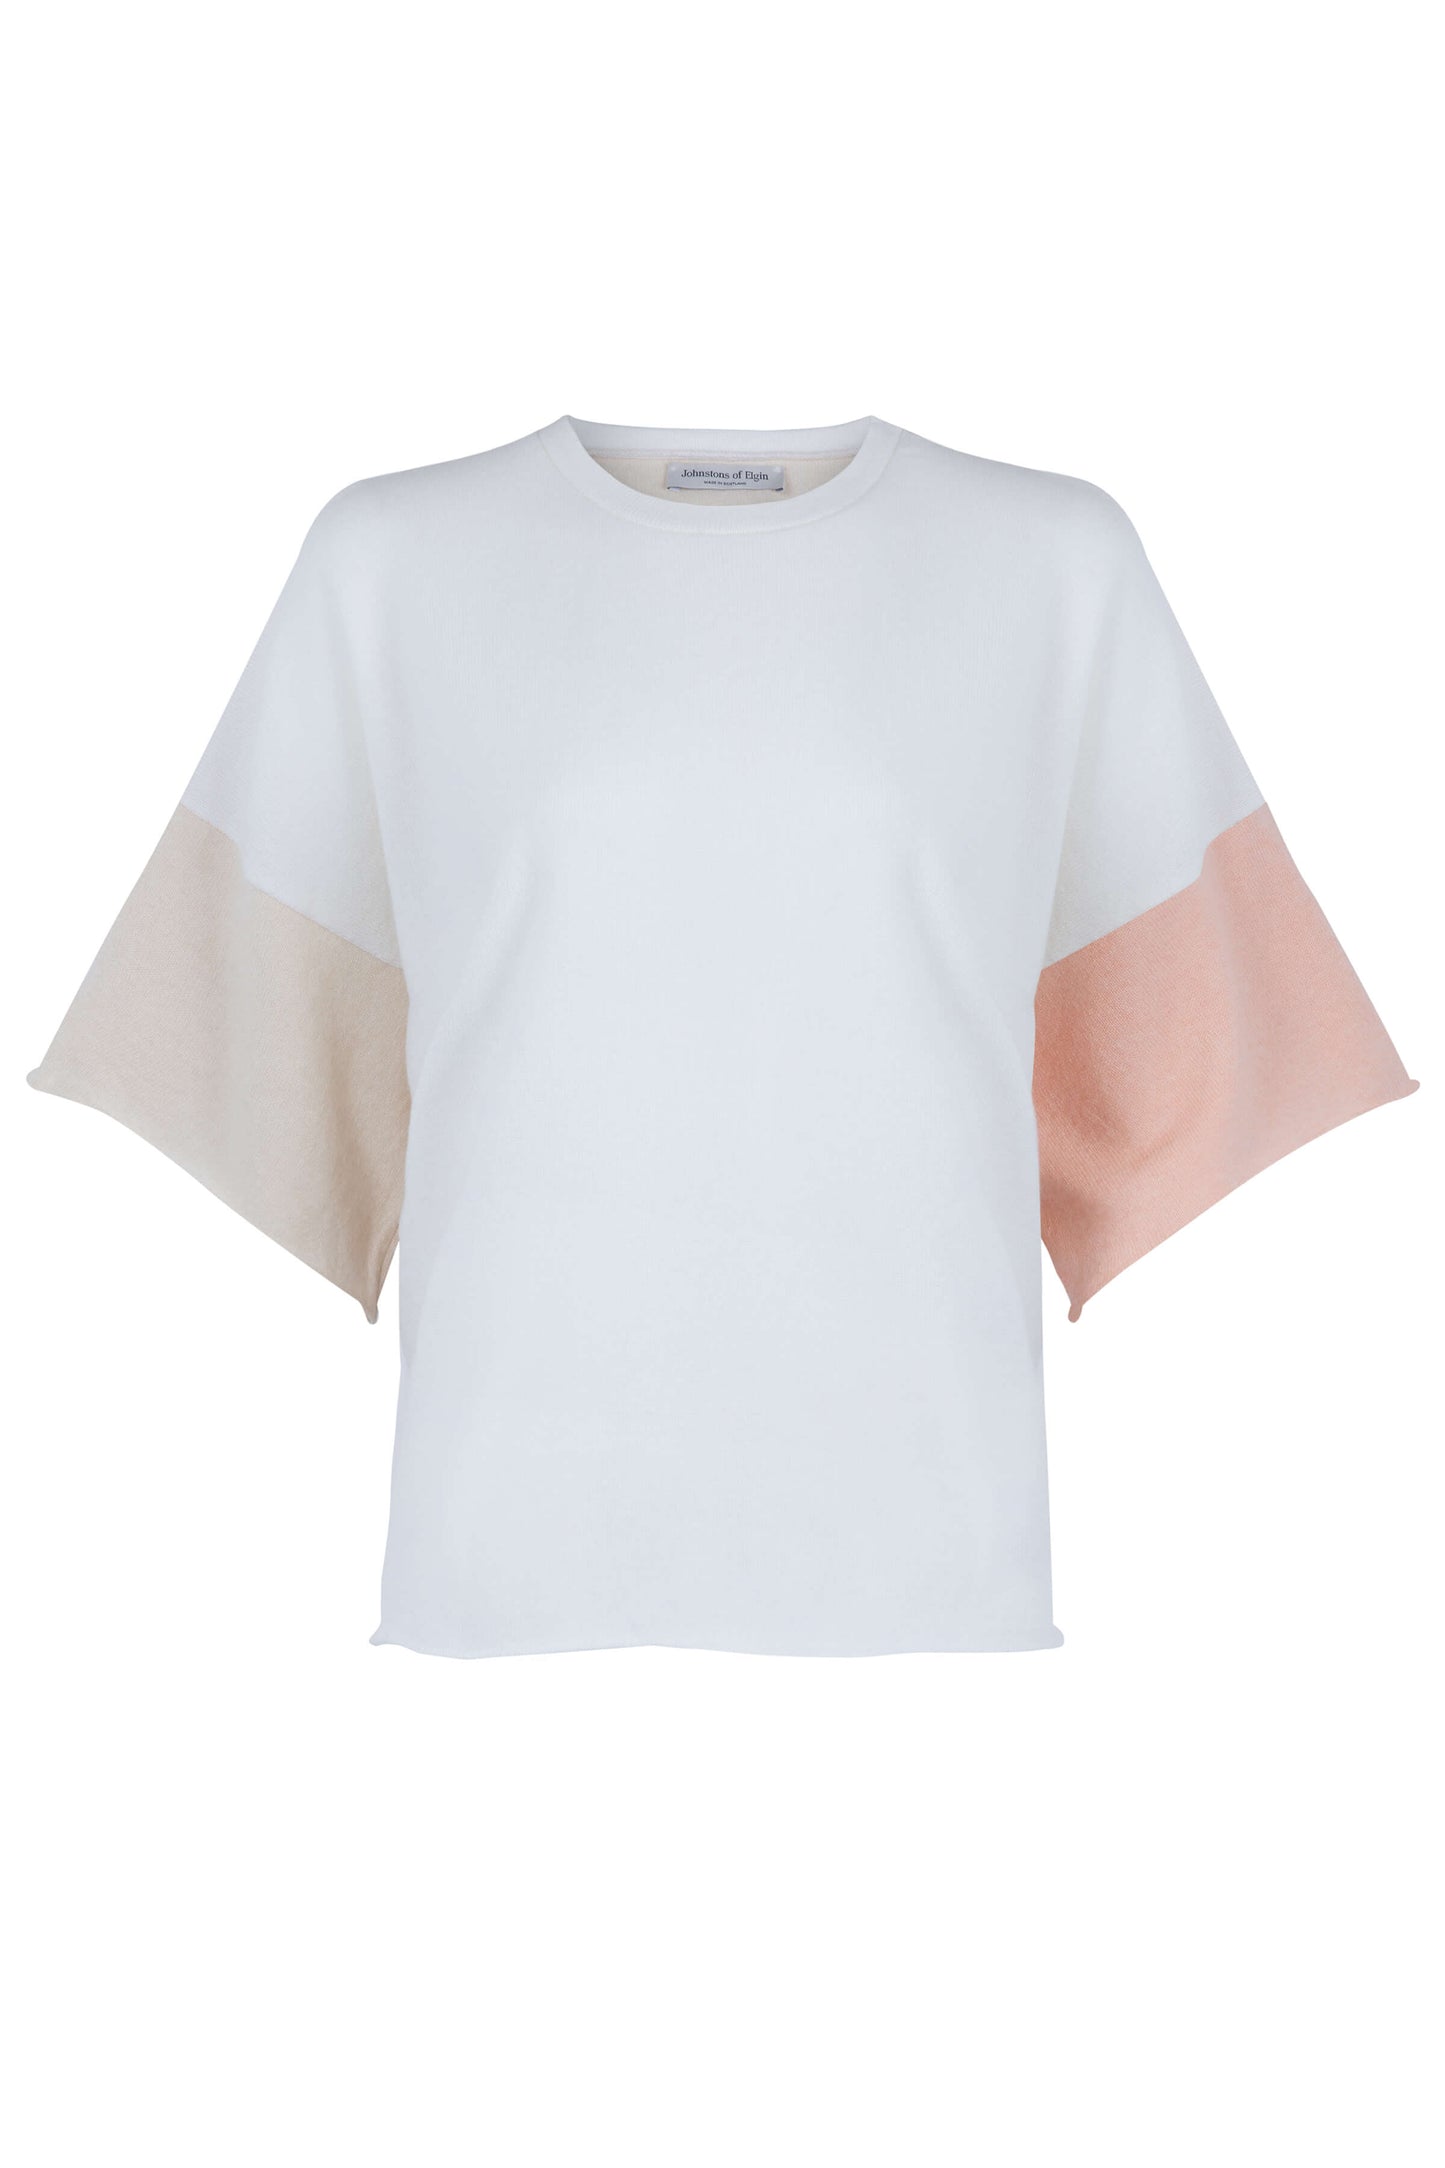 Johnstons of Elgin SS24 Women's Knitwear Luna White, Oyster & Champagne Colour Block Cashmere T-Shirt KAP05200Q24277